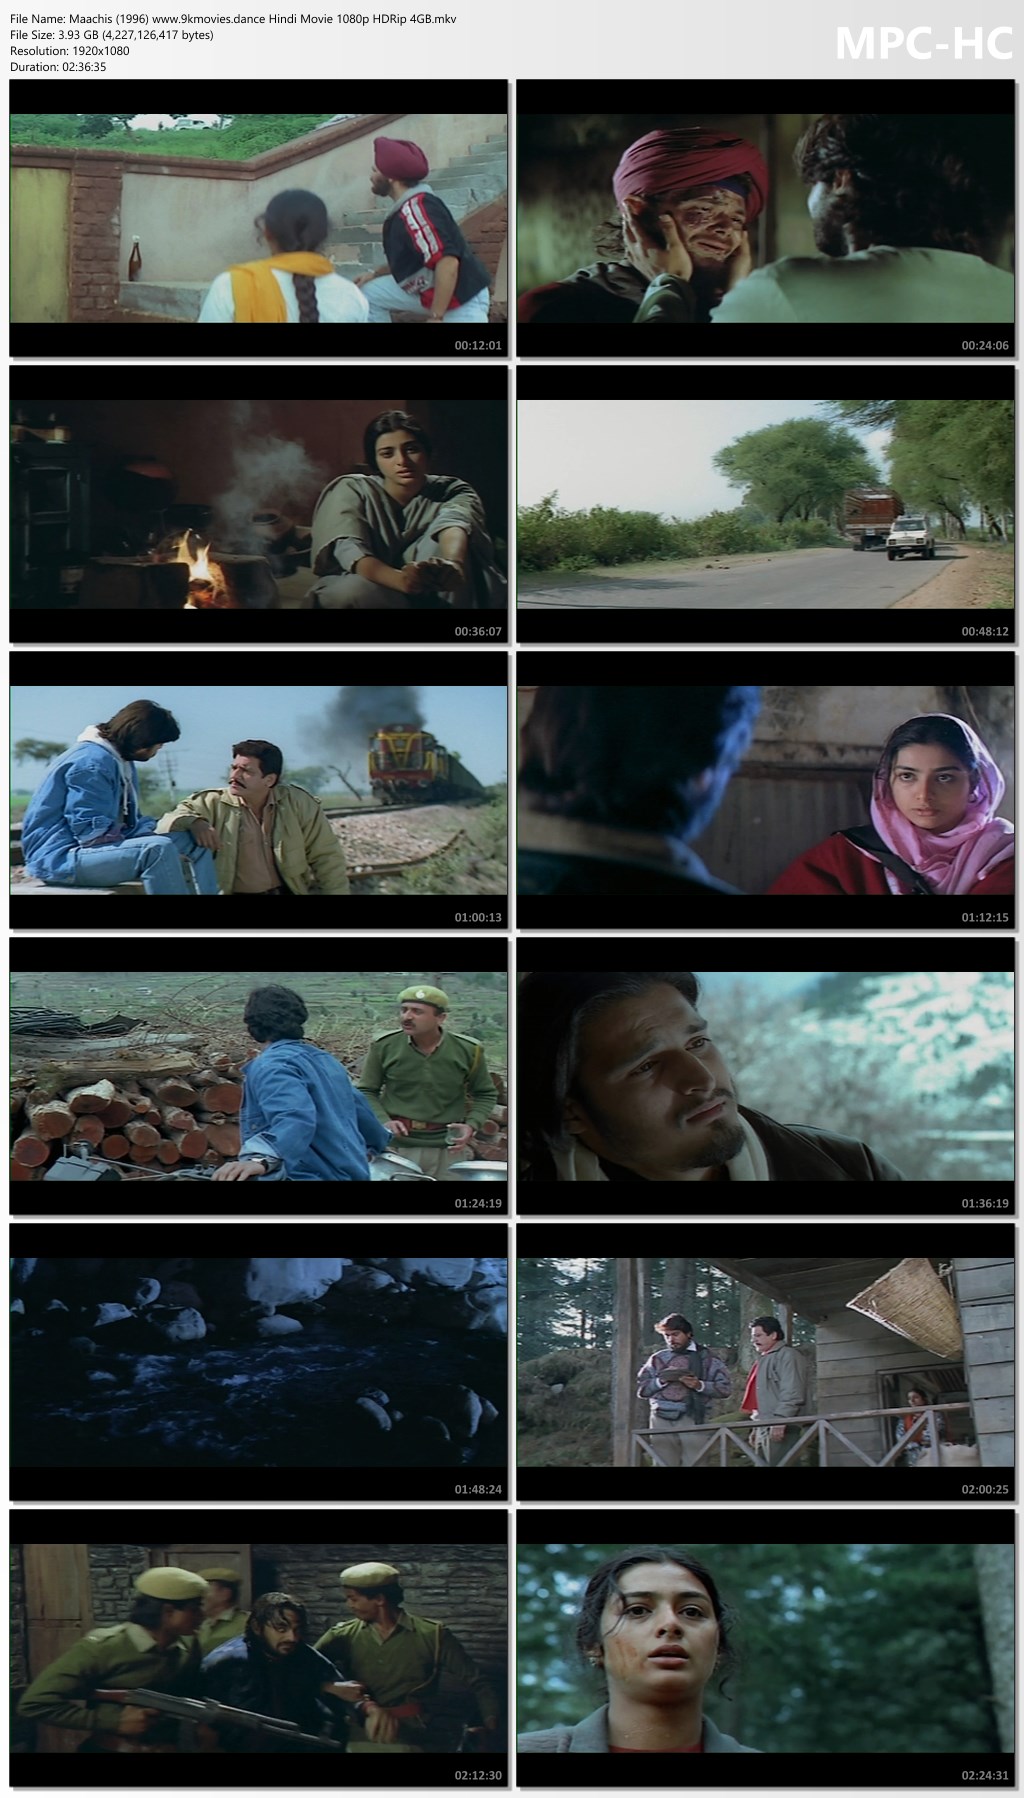 Maachis 1996 www.9kmovies.dance Hindi Movie 1080p HDRip 4GB.mkv thumbs